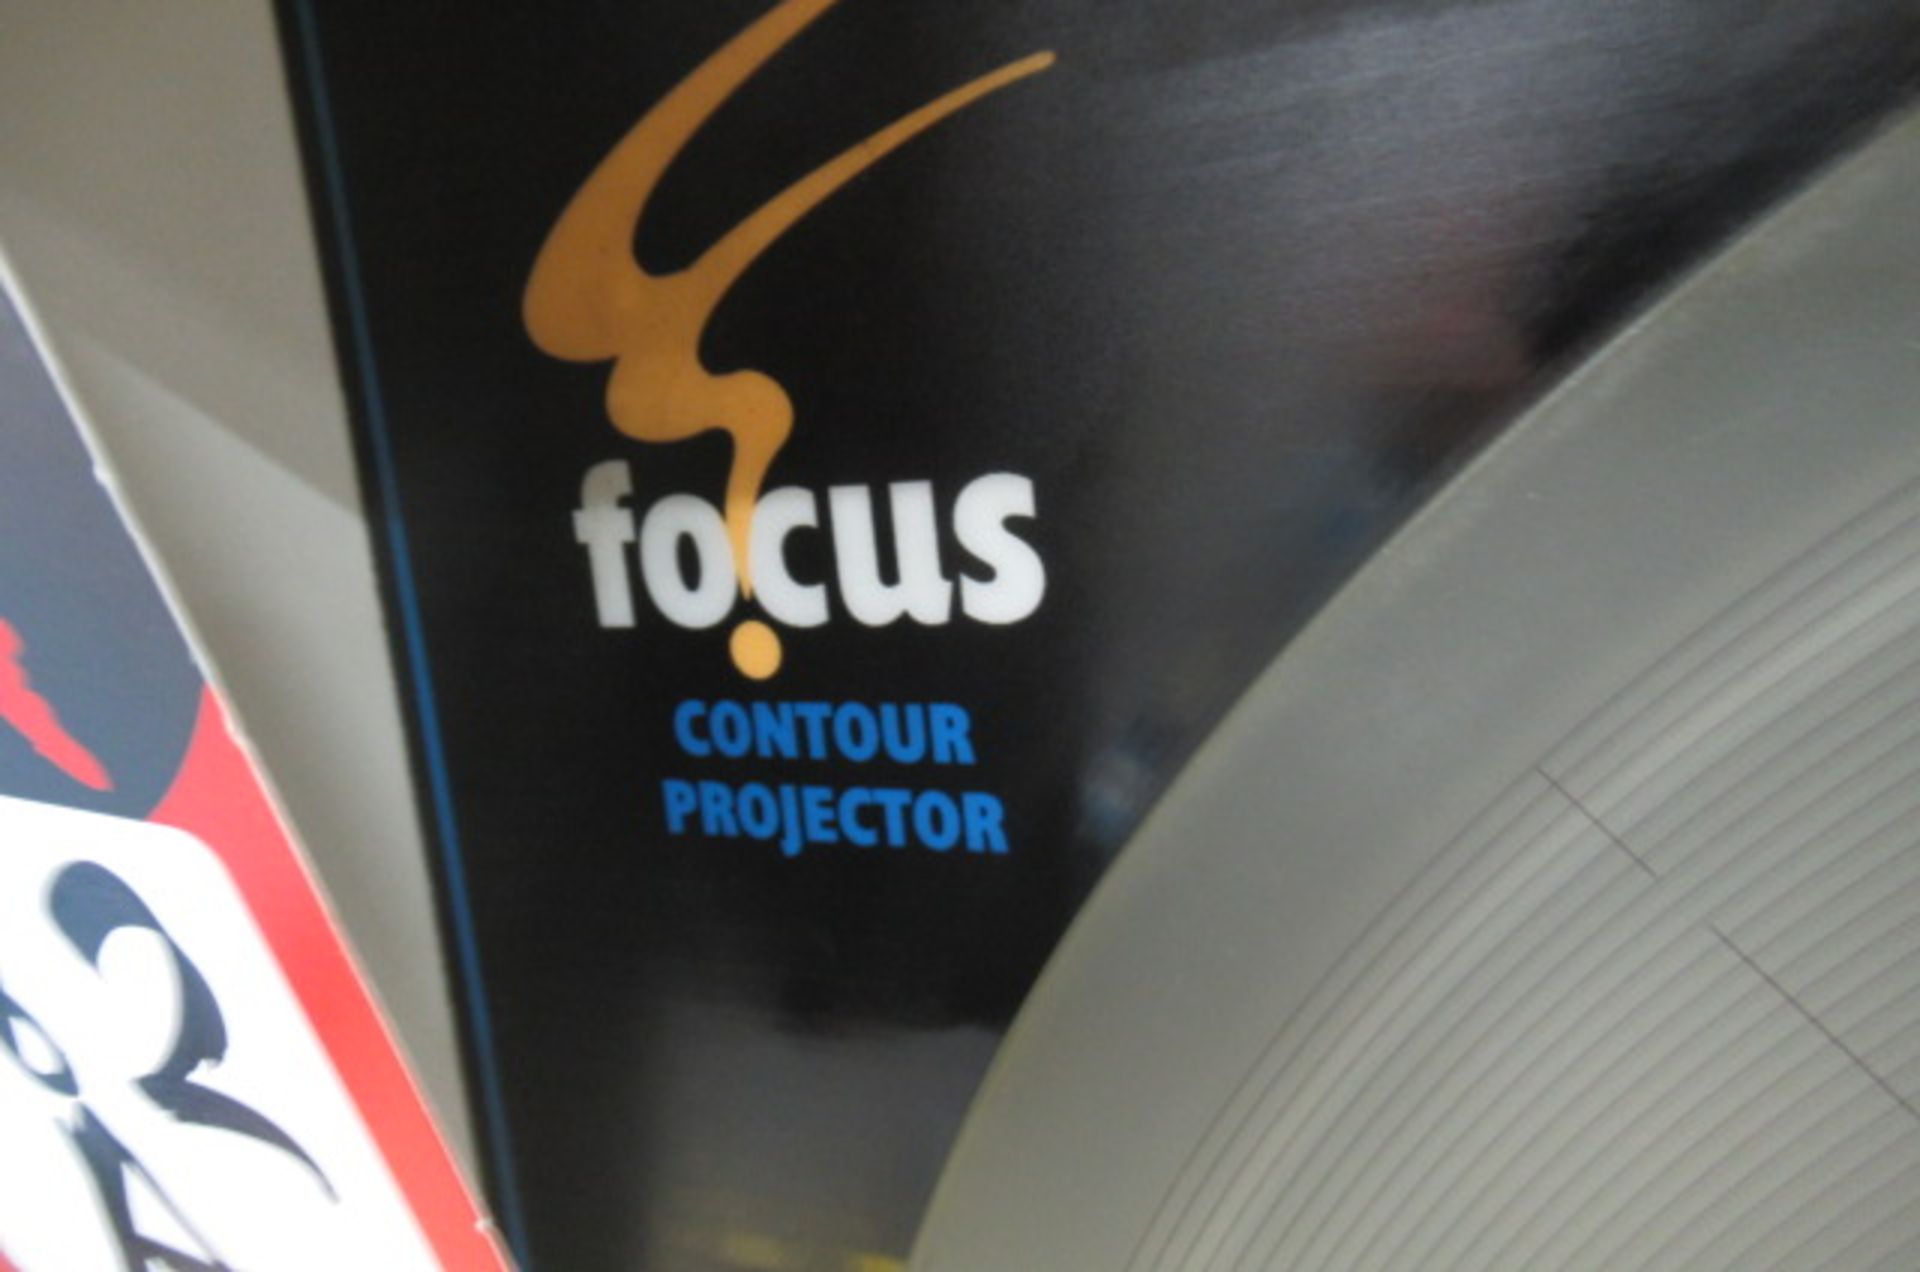 Focus Contour Projector w/ Telecentric Lens System Asset # 0217, s/n FC2001298 - Image 5 of 7